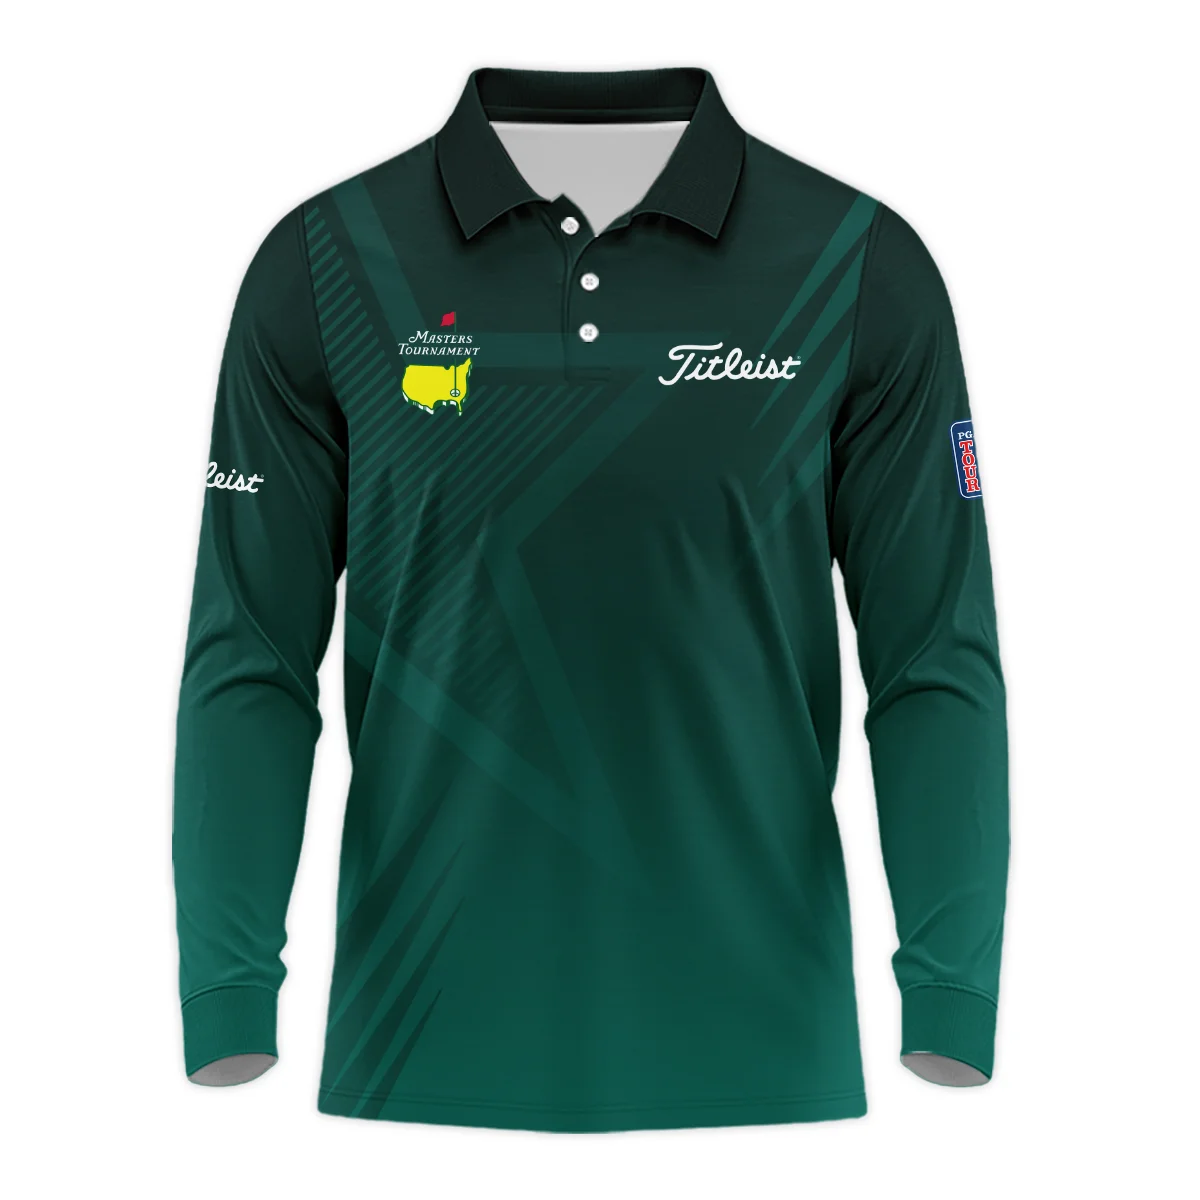 Sports Titleist Masters Tournament Sleeveless Jacket Star Pattern Dark Green Gradient Golf Sleeveless Jacket